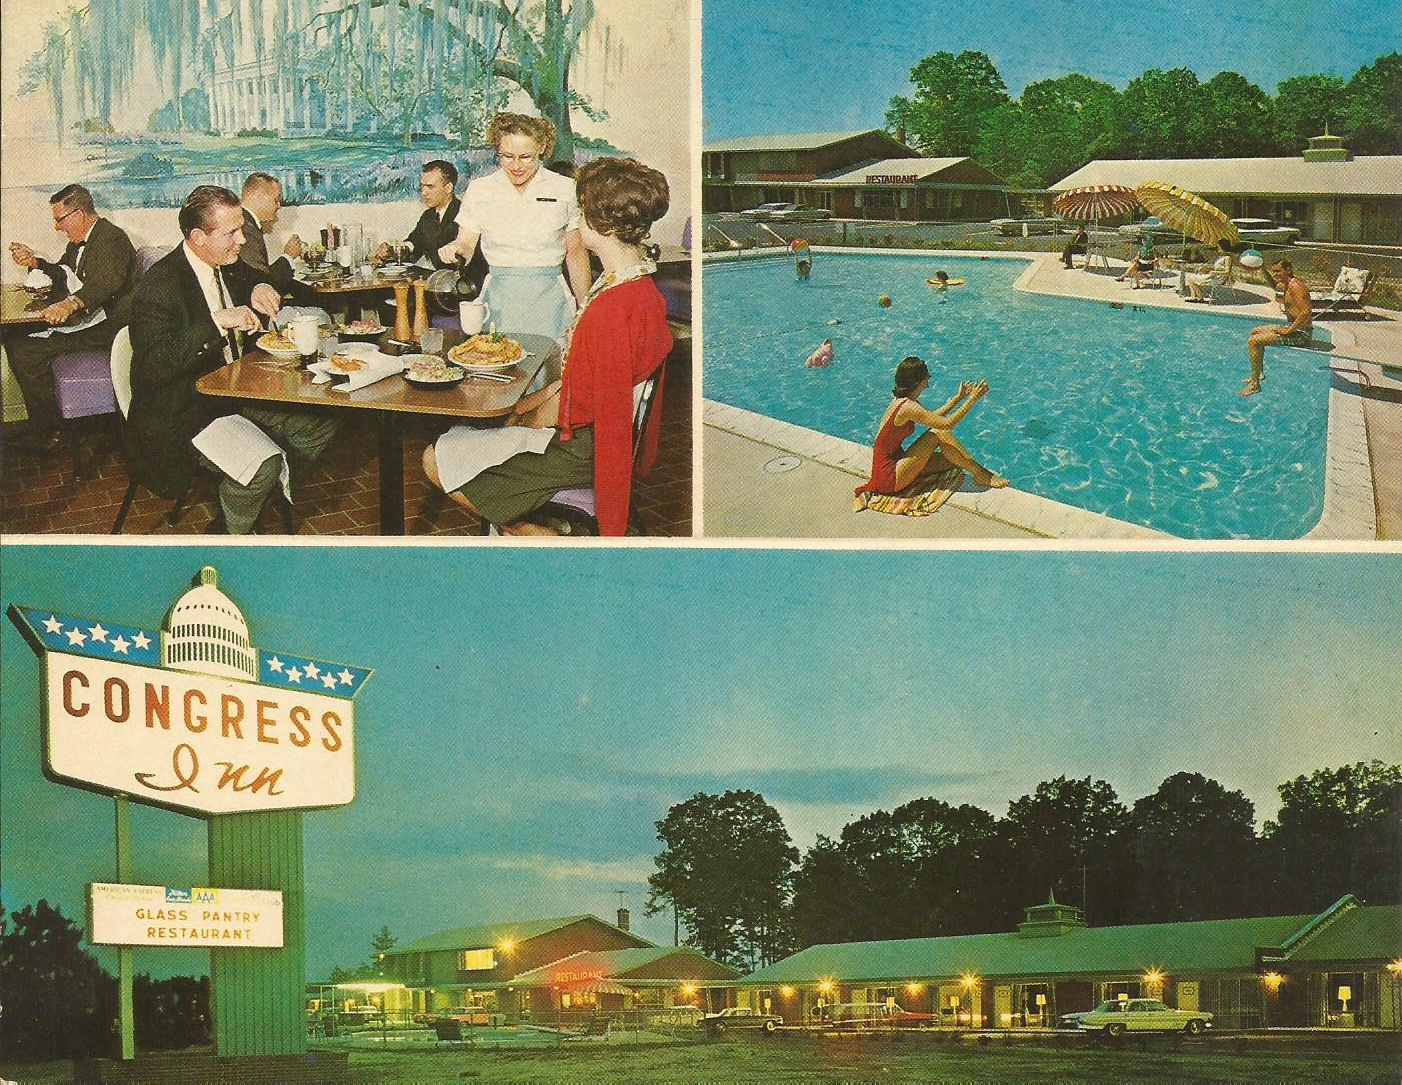 Inn monroe congress ohio cardboard motel america archive